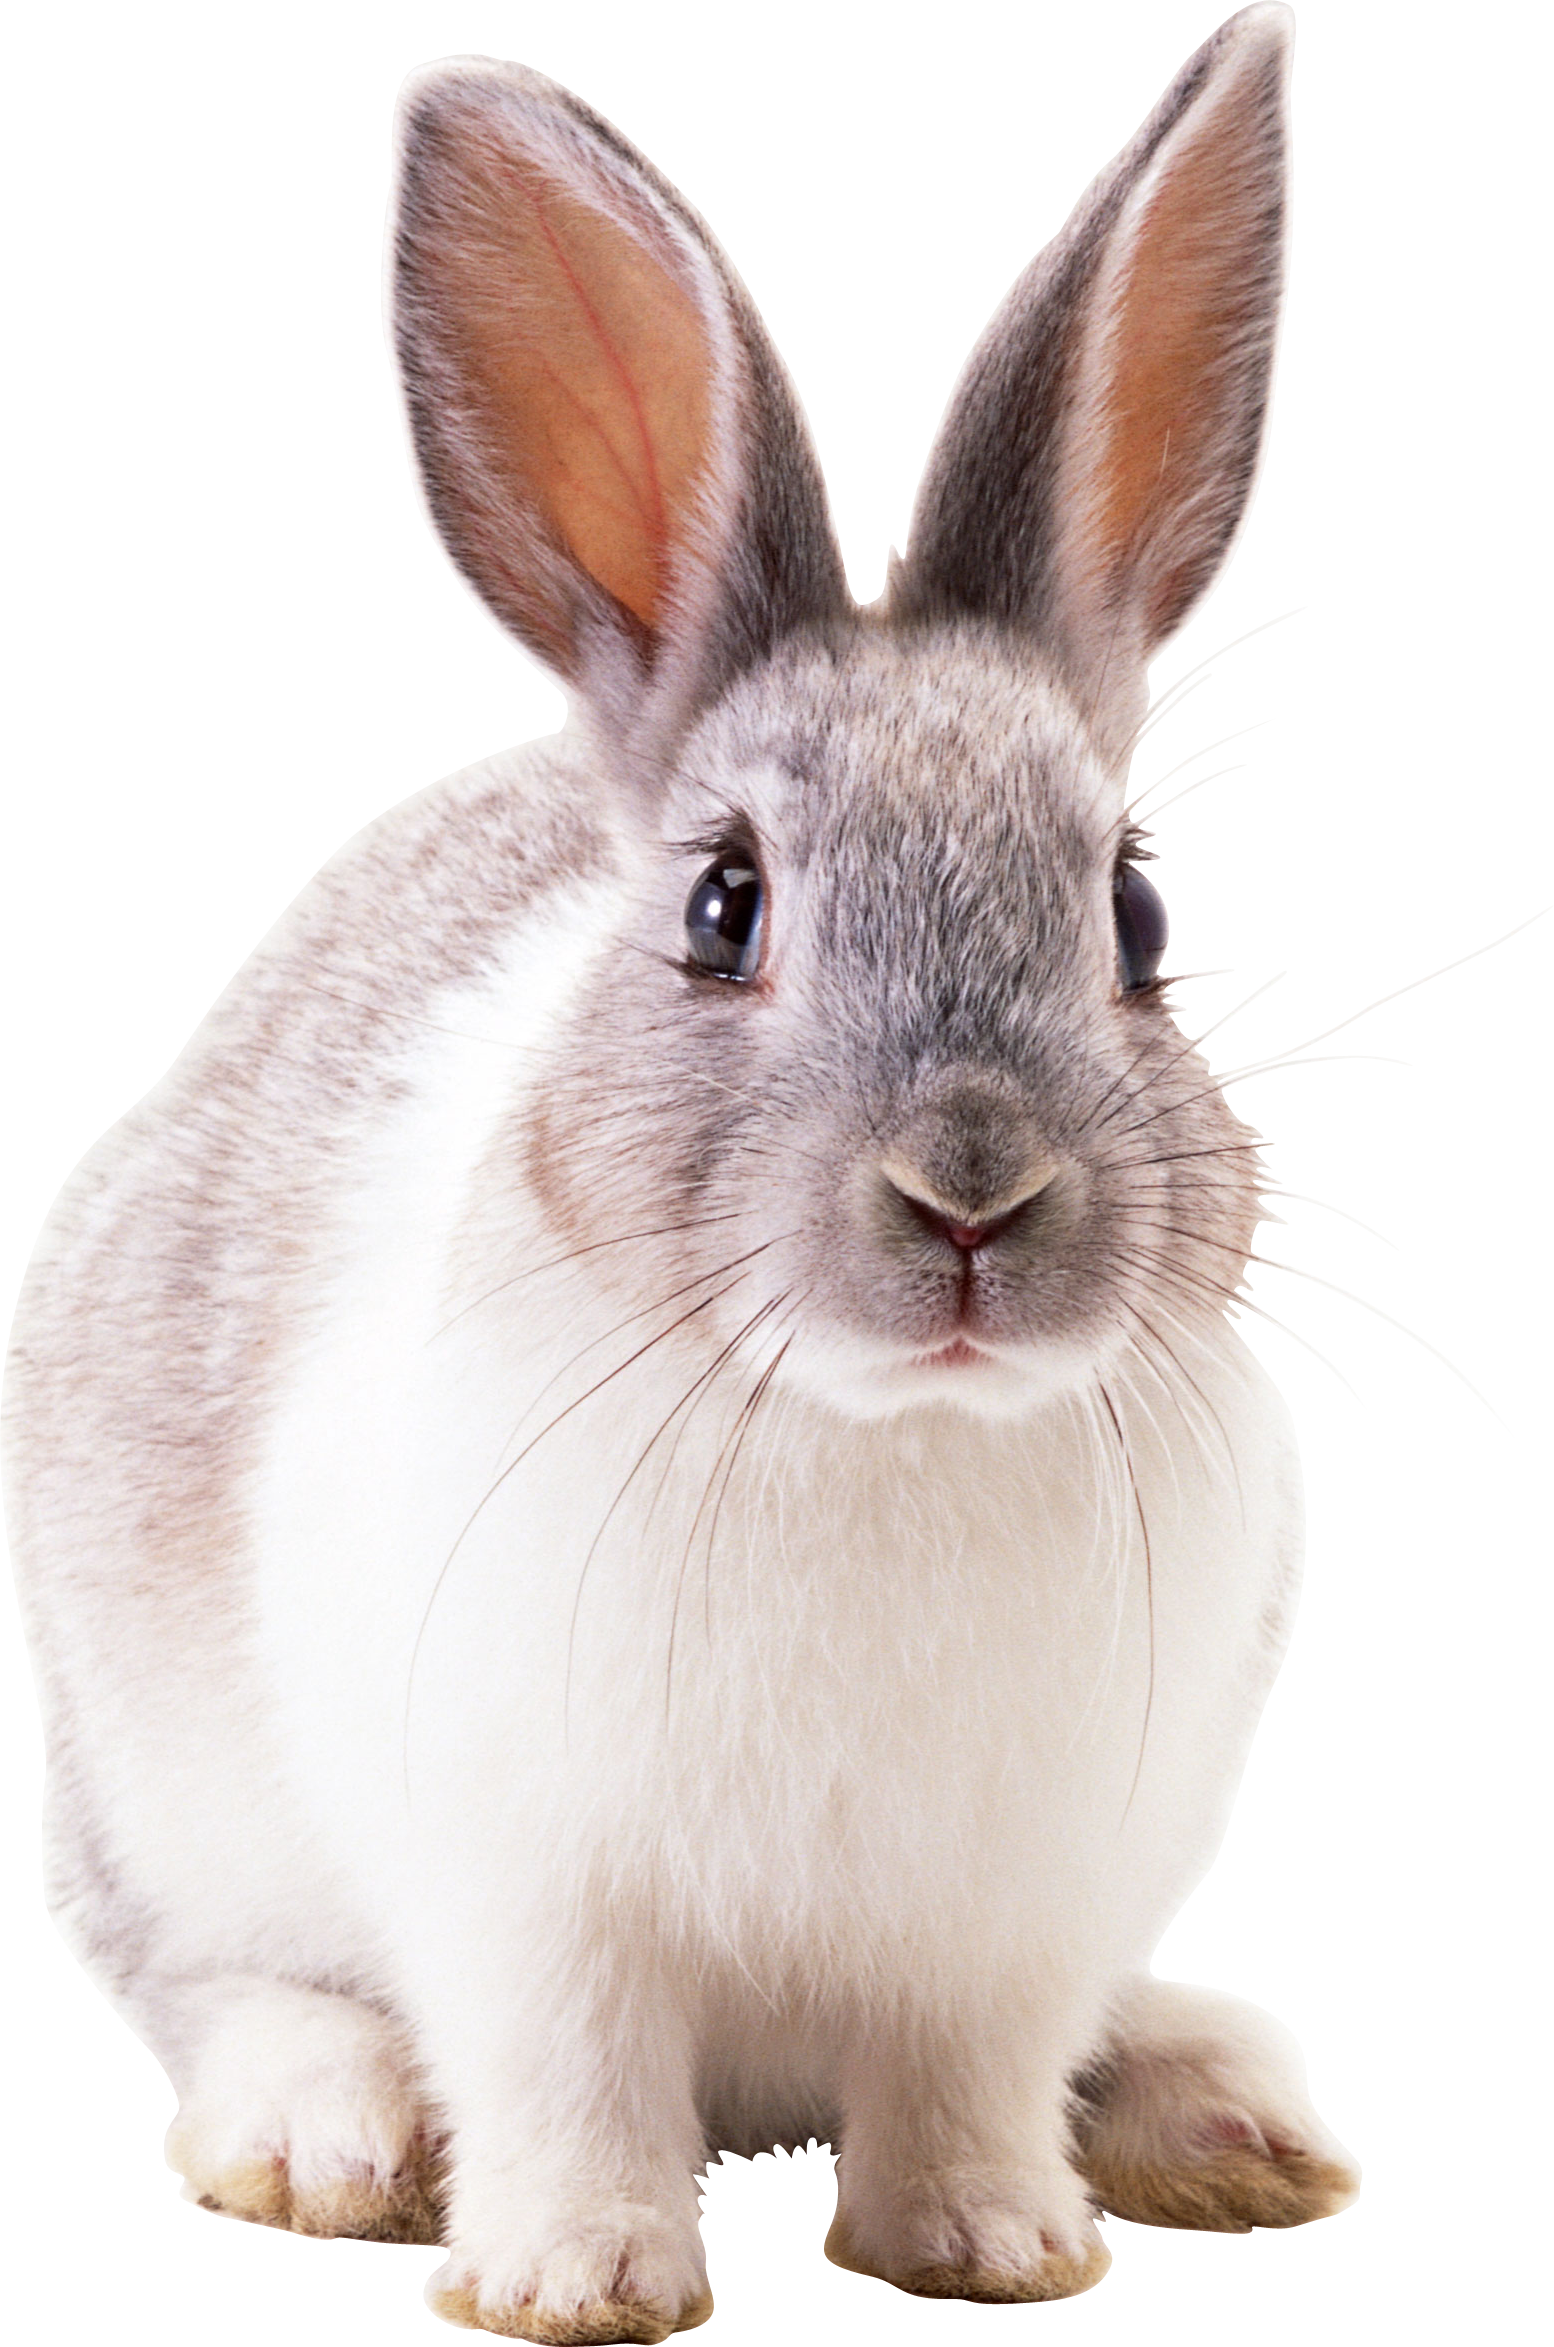 A Close Up Of A Rabbit